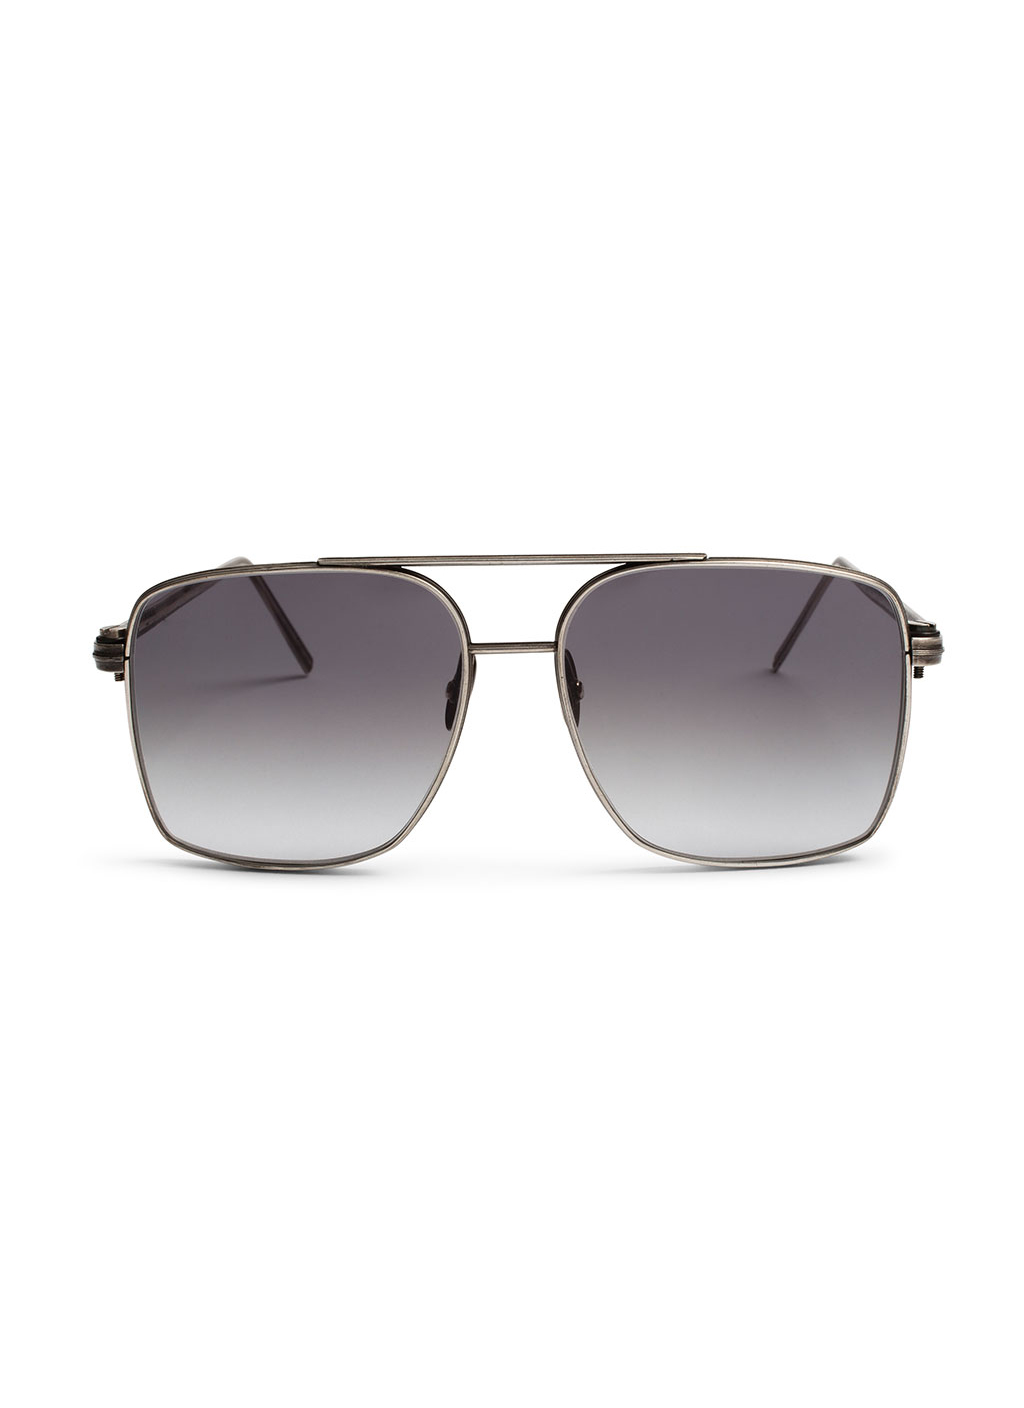 hide-m | WERKSTATT:MÜNCHEN Glasses #2 faded grey M0502